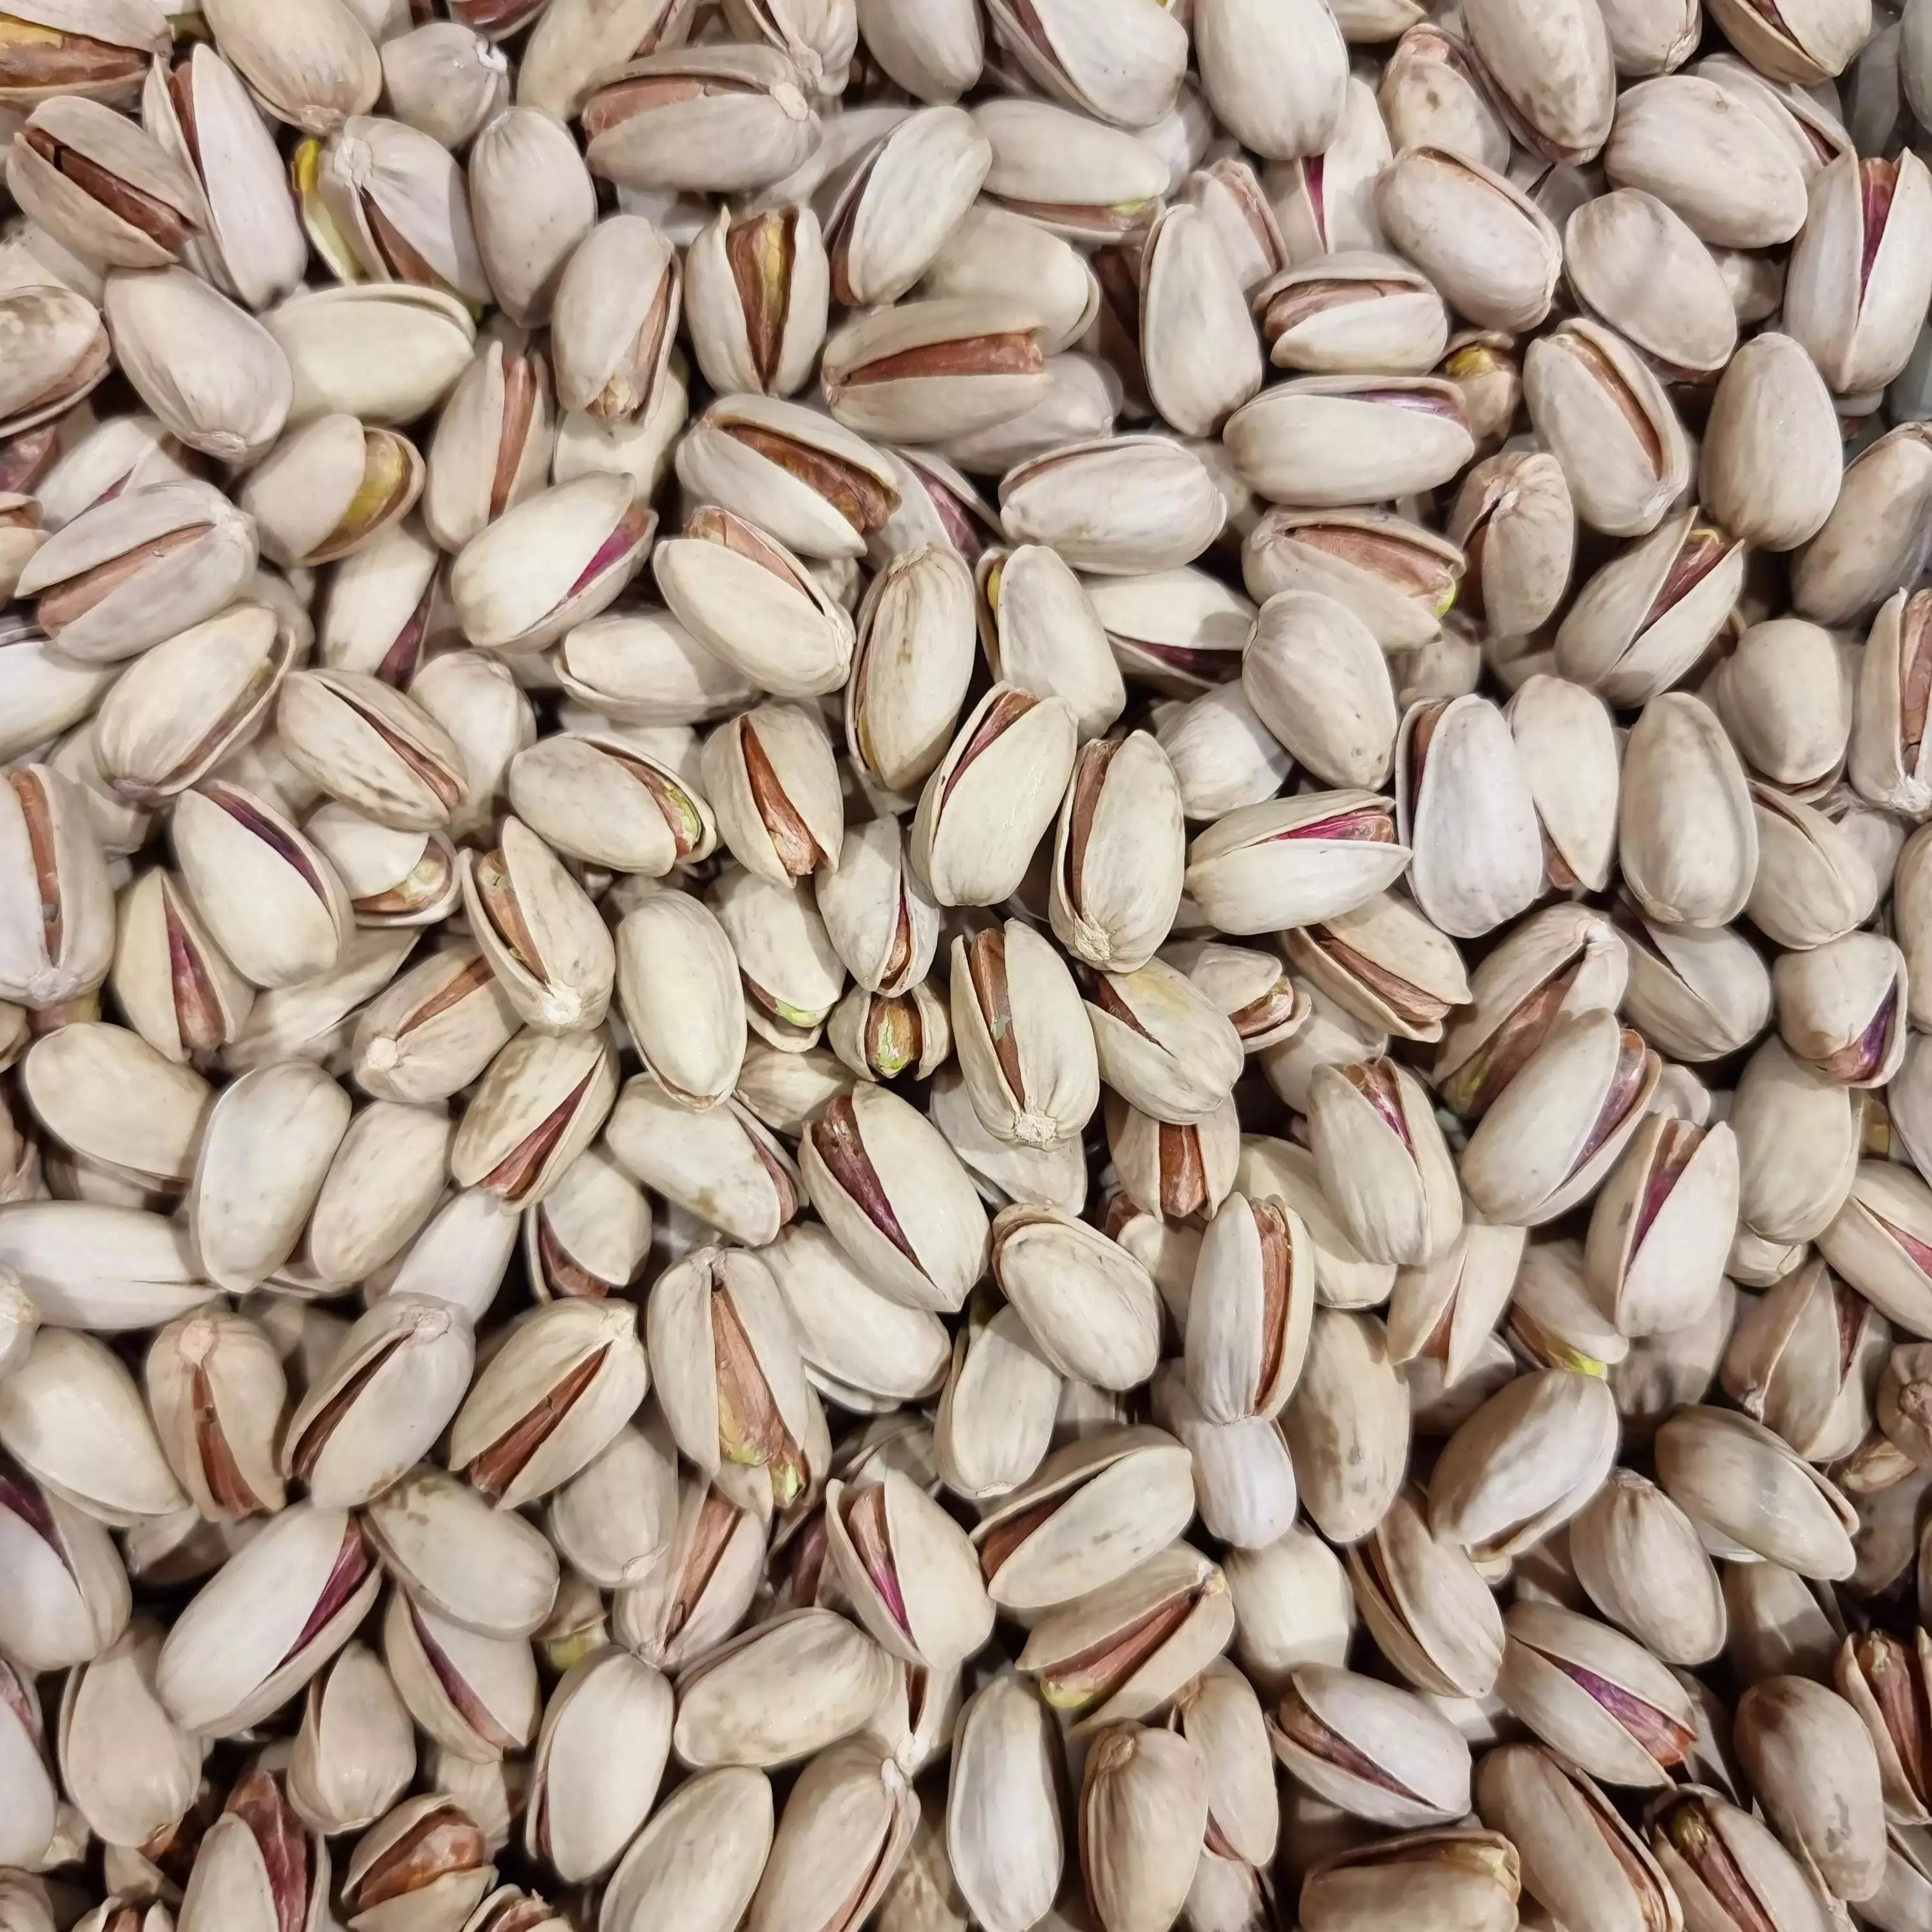 Organic raw shelled pistachios 2023 price list